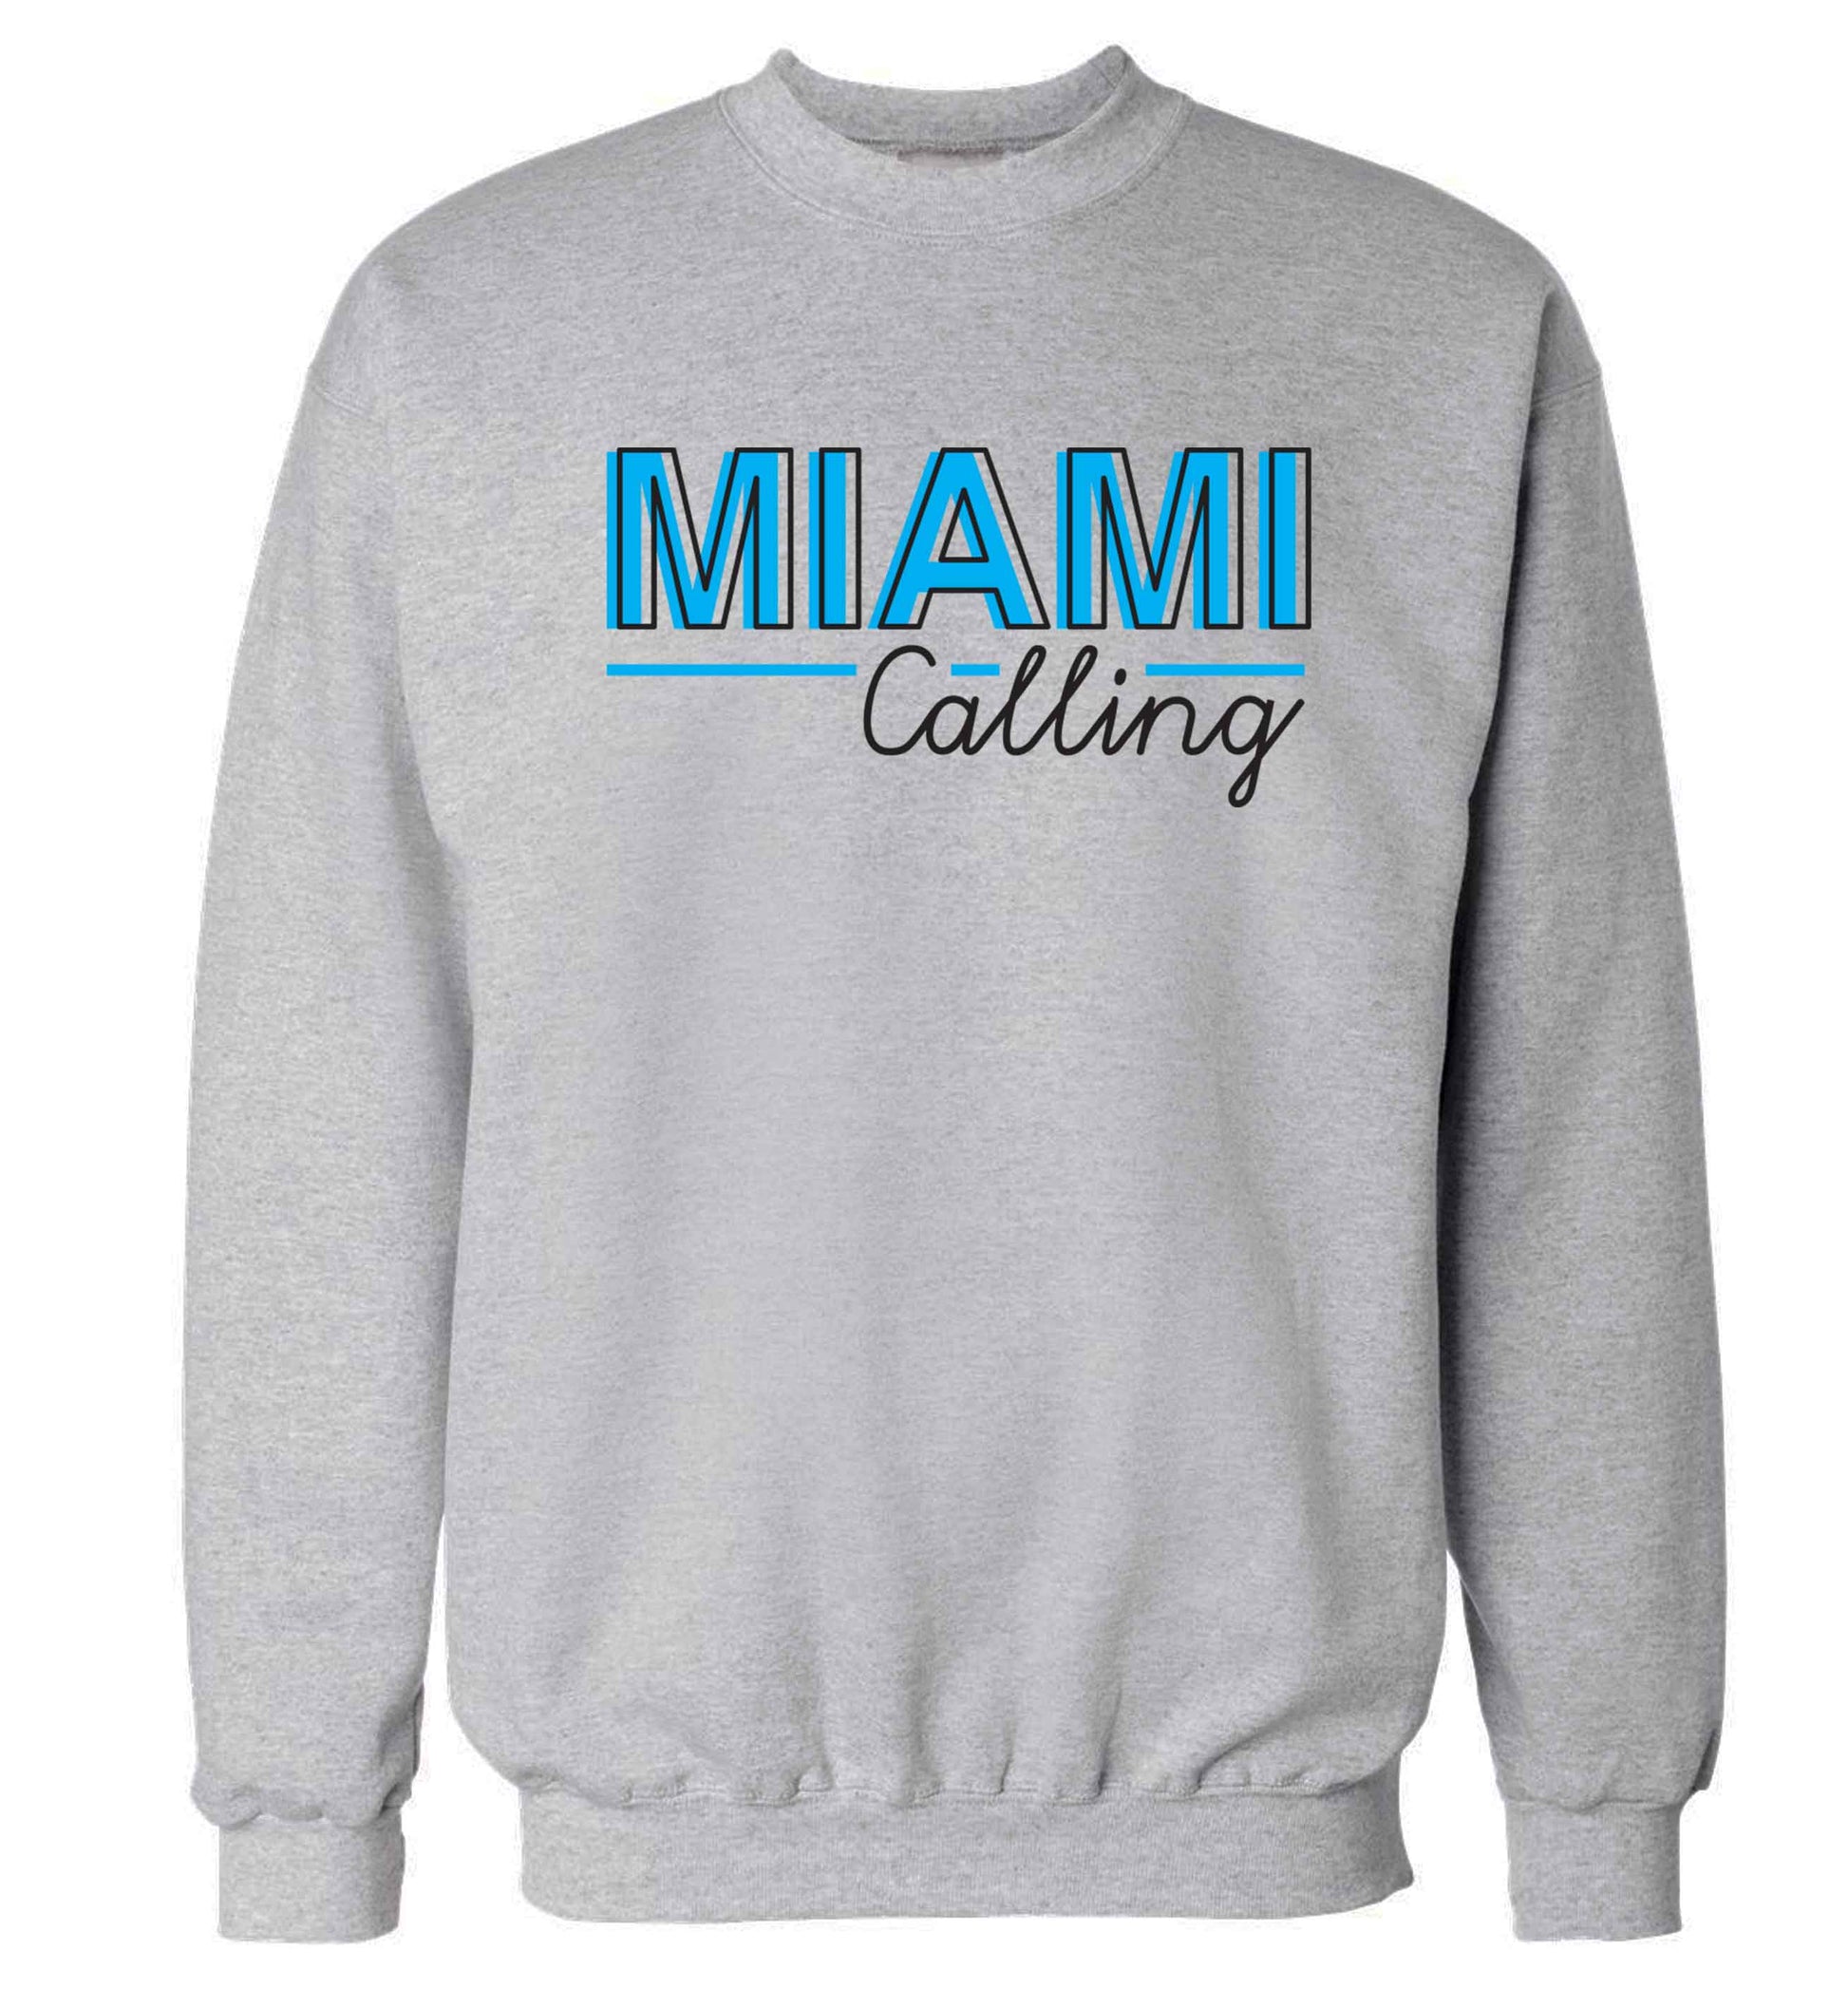 Miami calling Adult's unisex grey Sweater 2XL